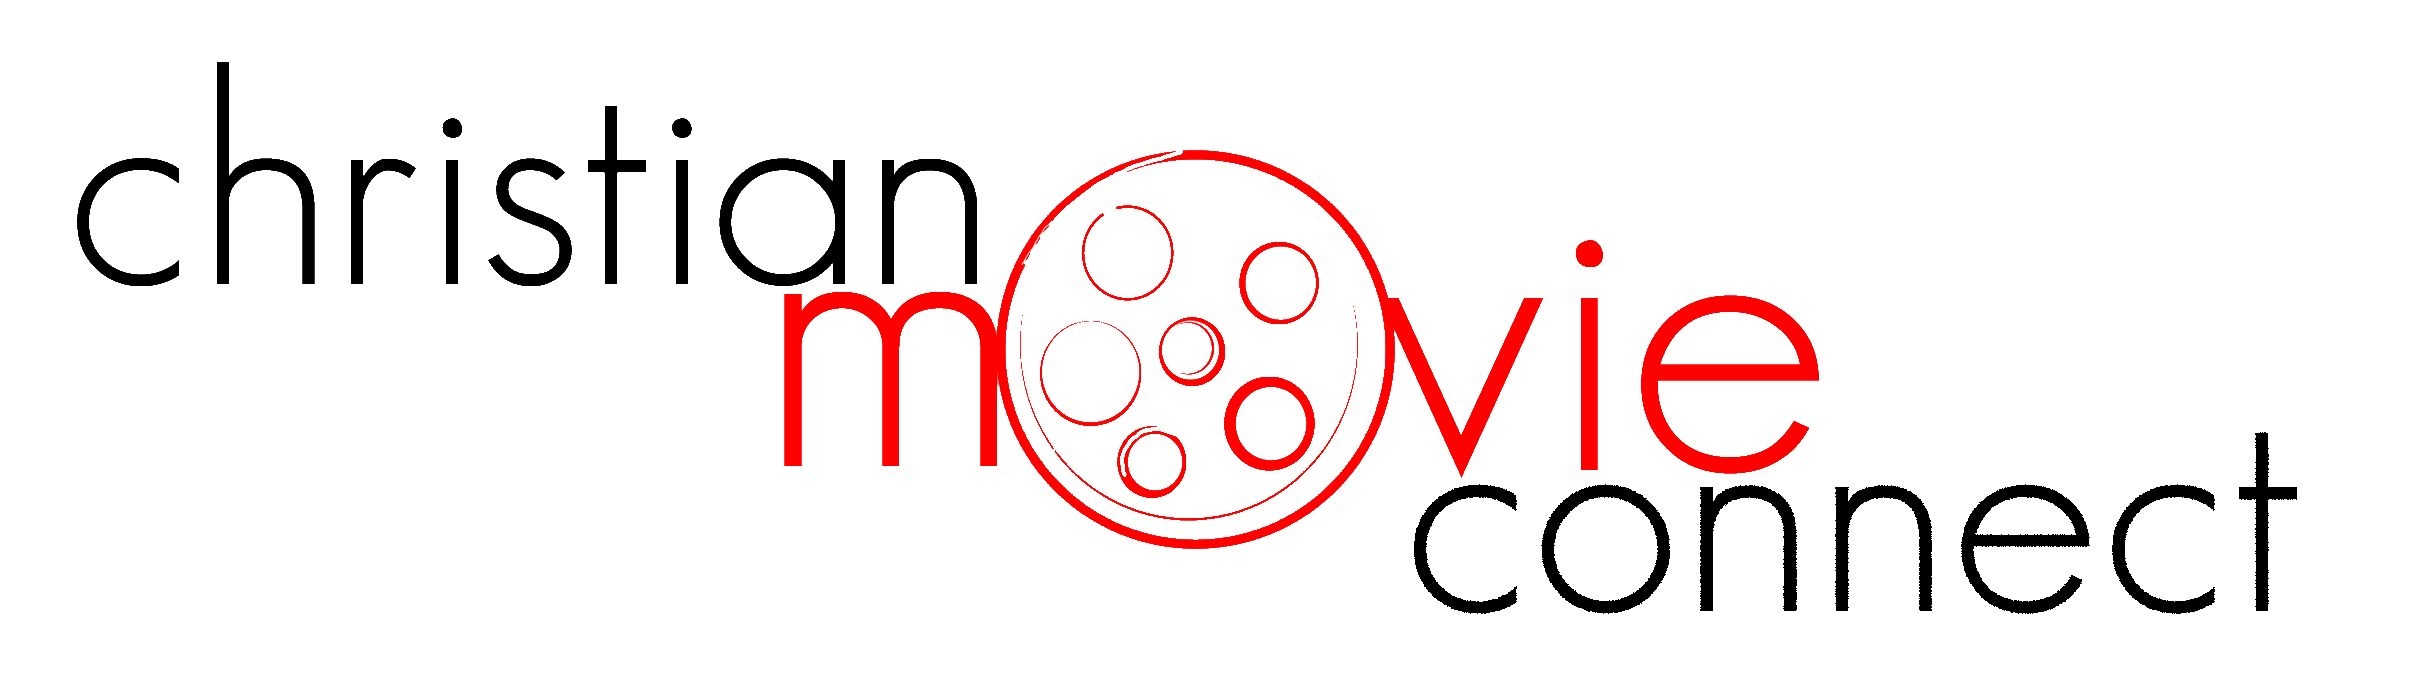 Christian Movie Connect logo